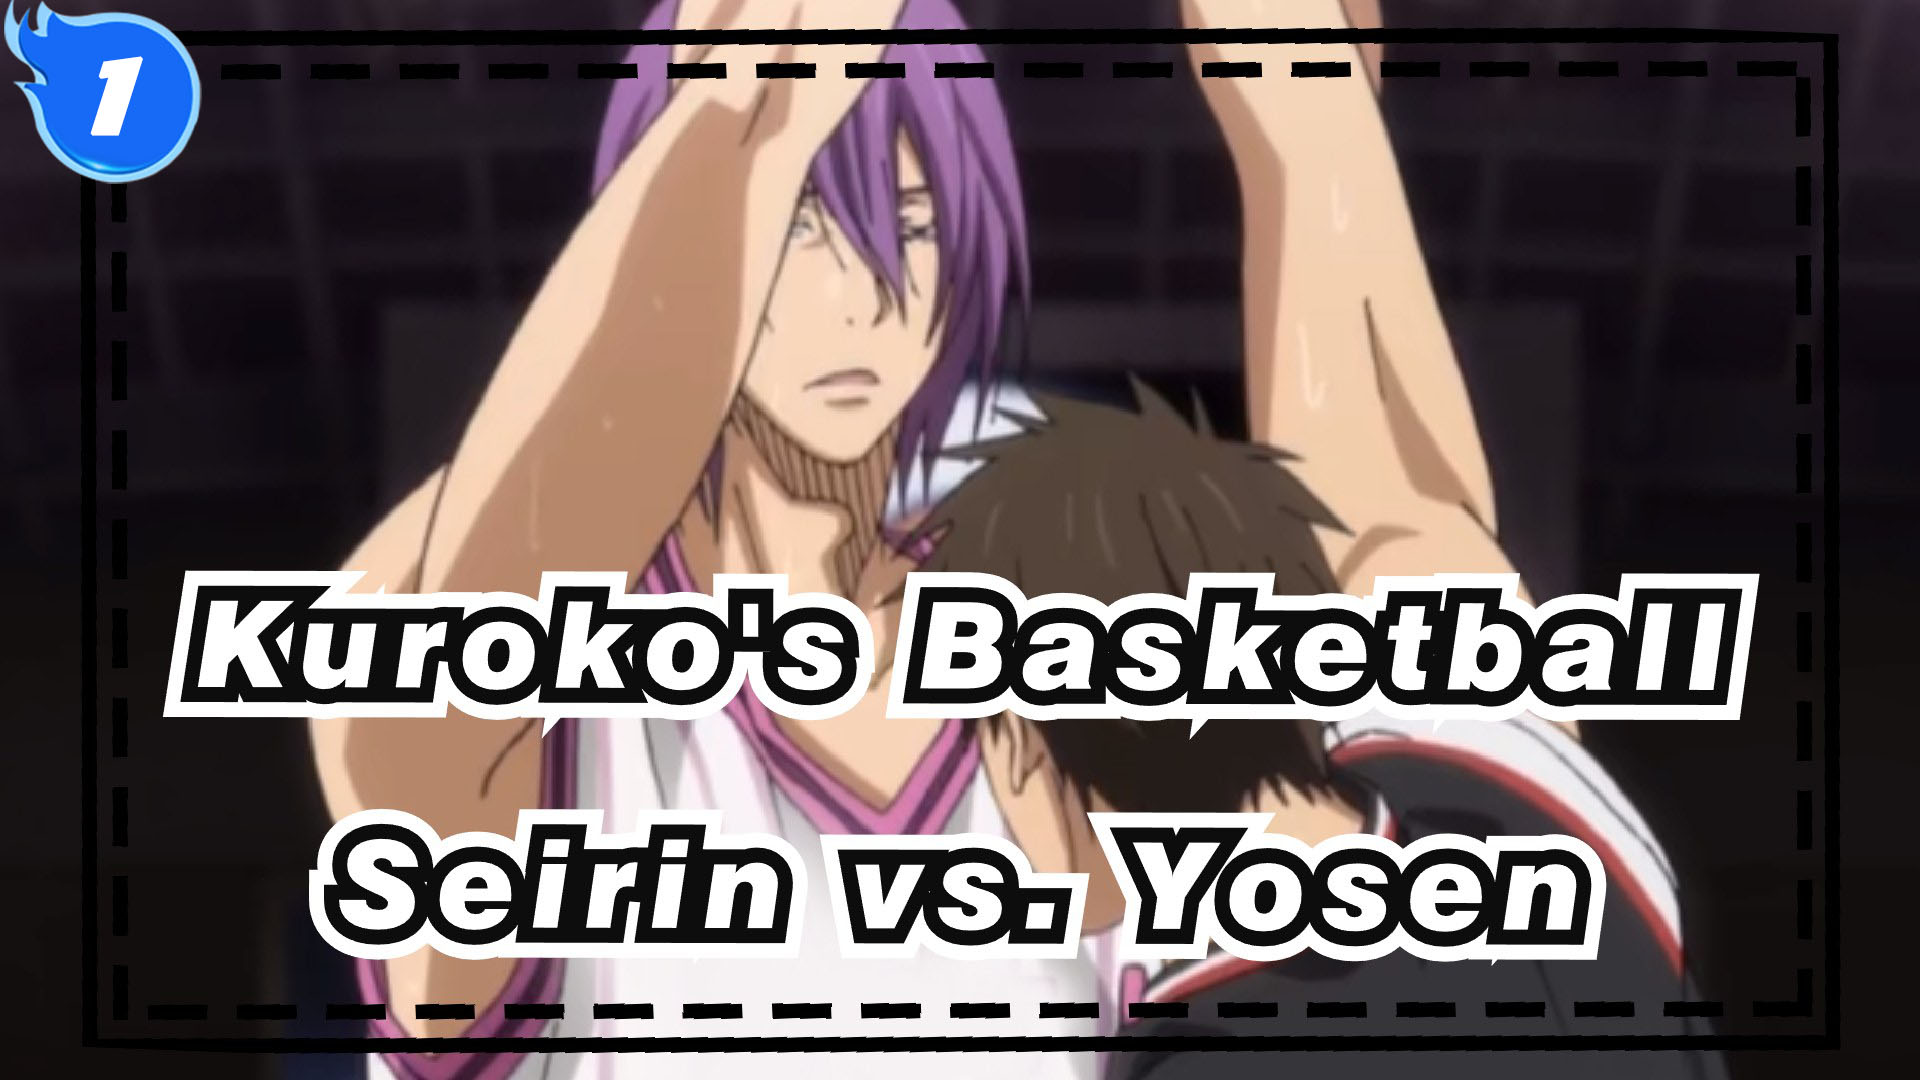 Murasakibara Contra Silver - Quem Vence? - Kuroko No Basket 